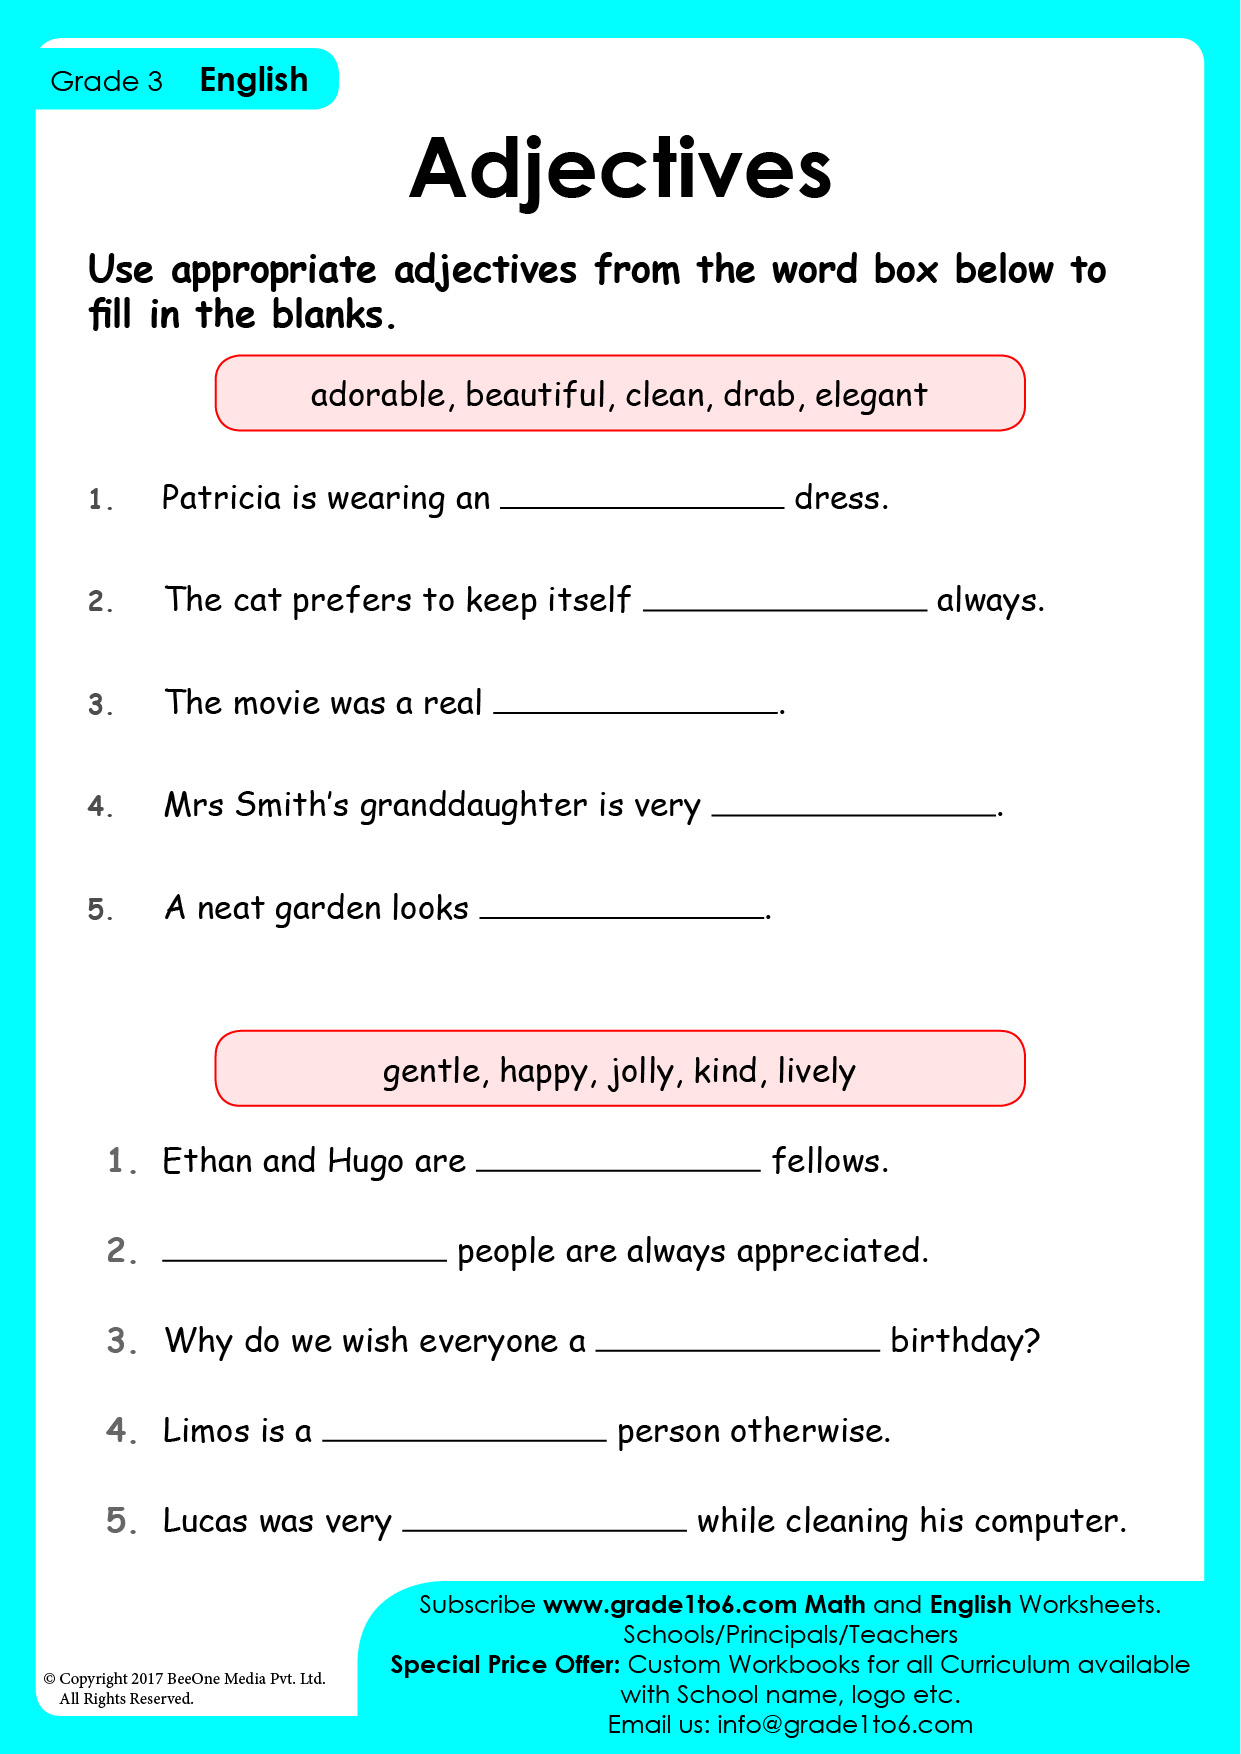 Class 3 Adjectives Worksheet Grade1to6